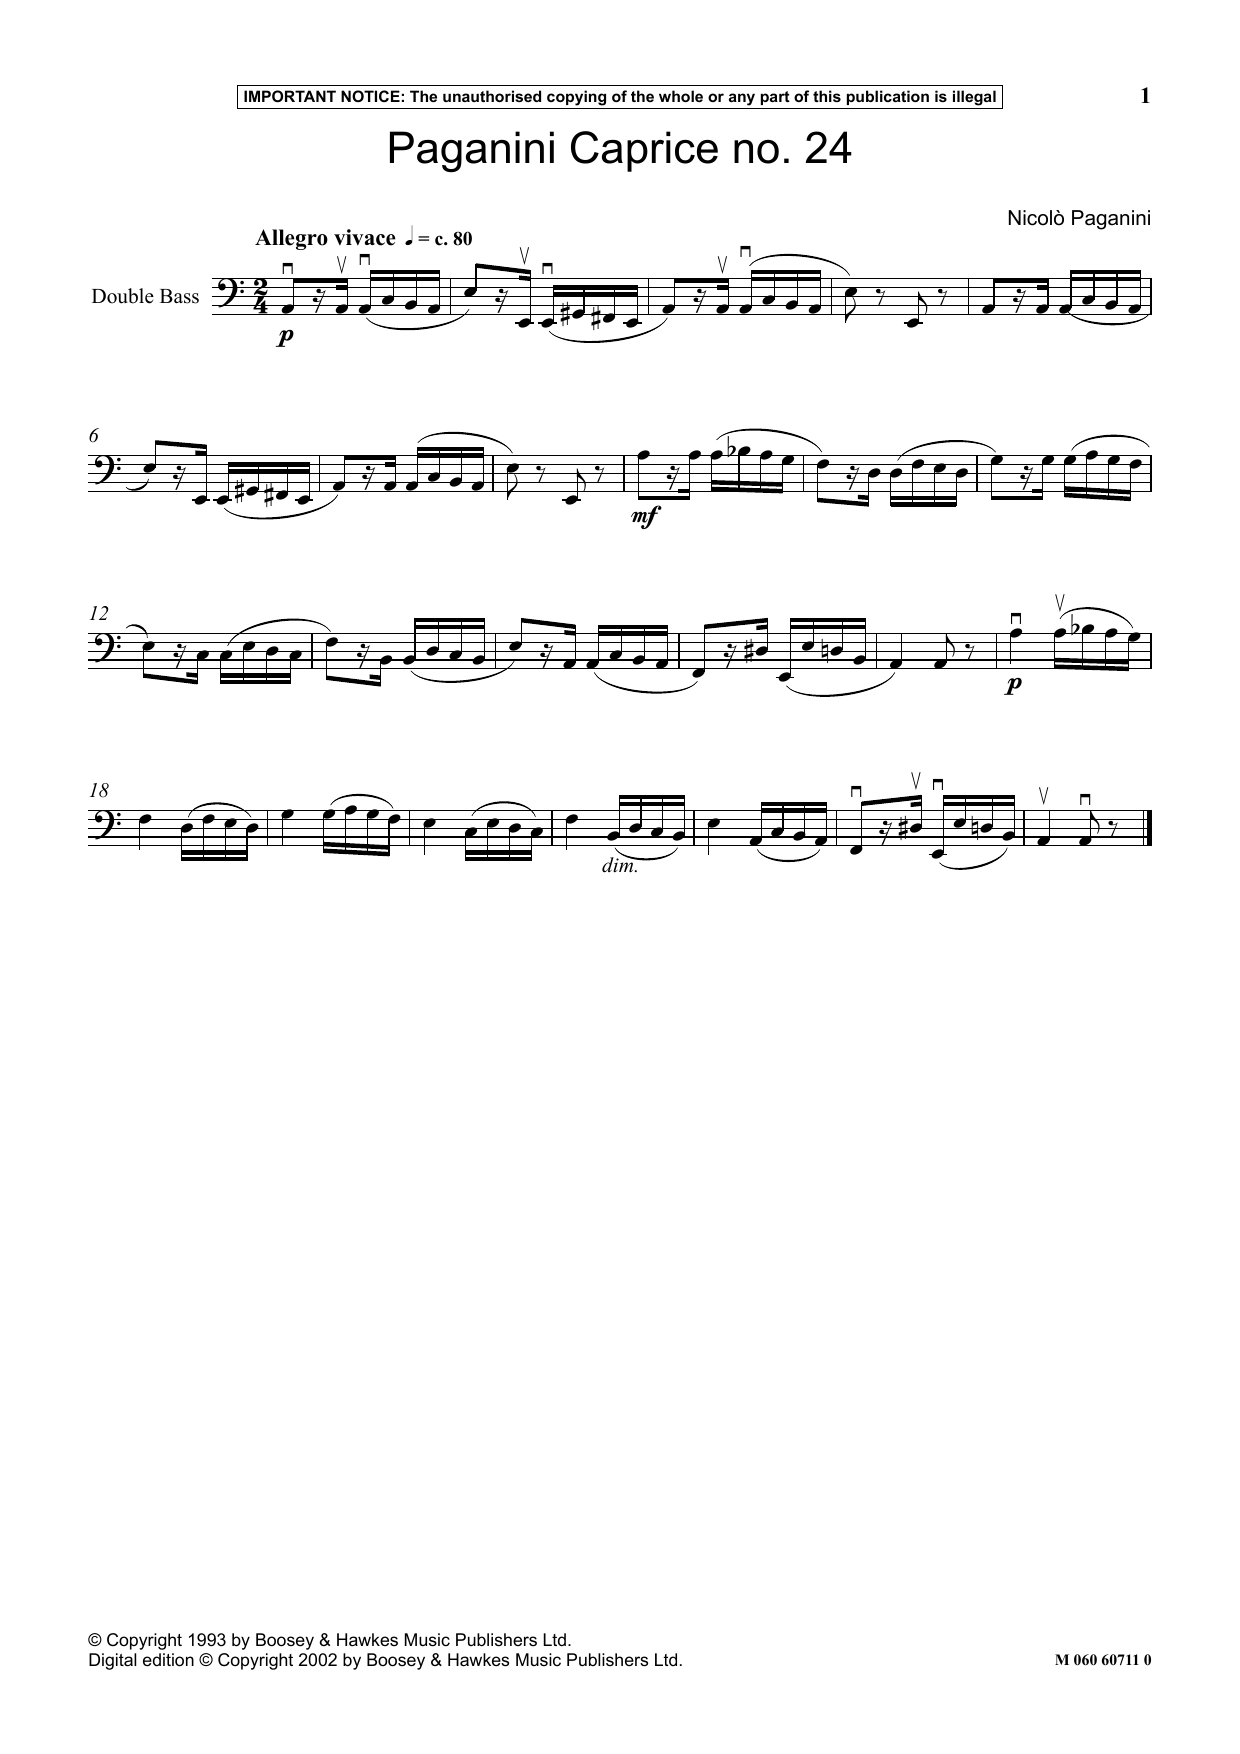 Download Nicolo Paganini Paganini Caprice No. 24 Sheet Music